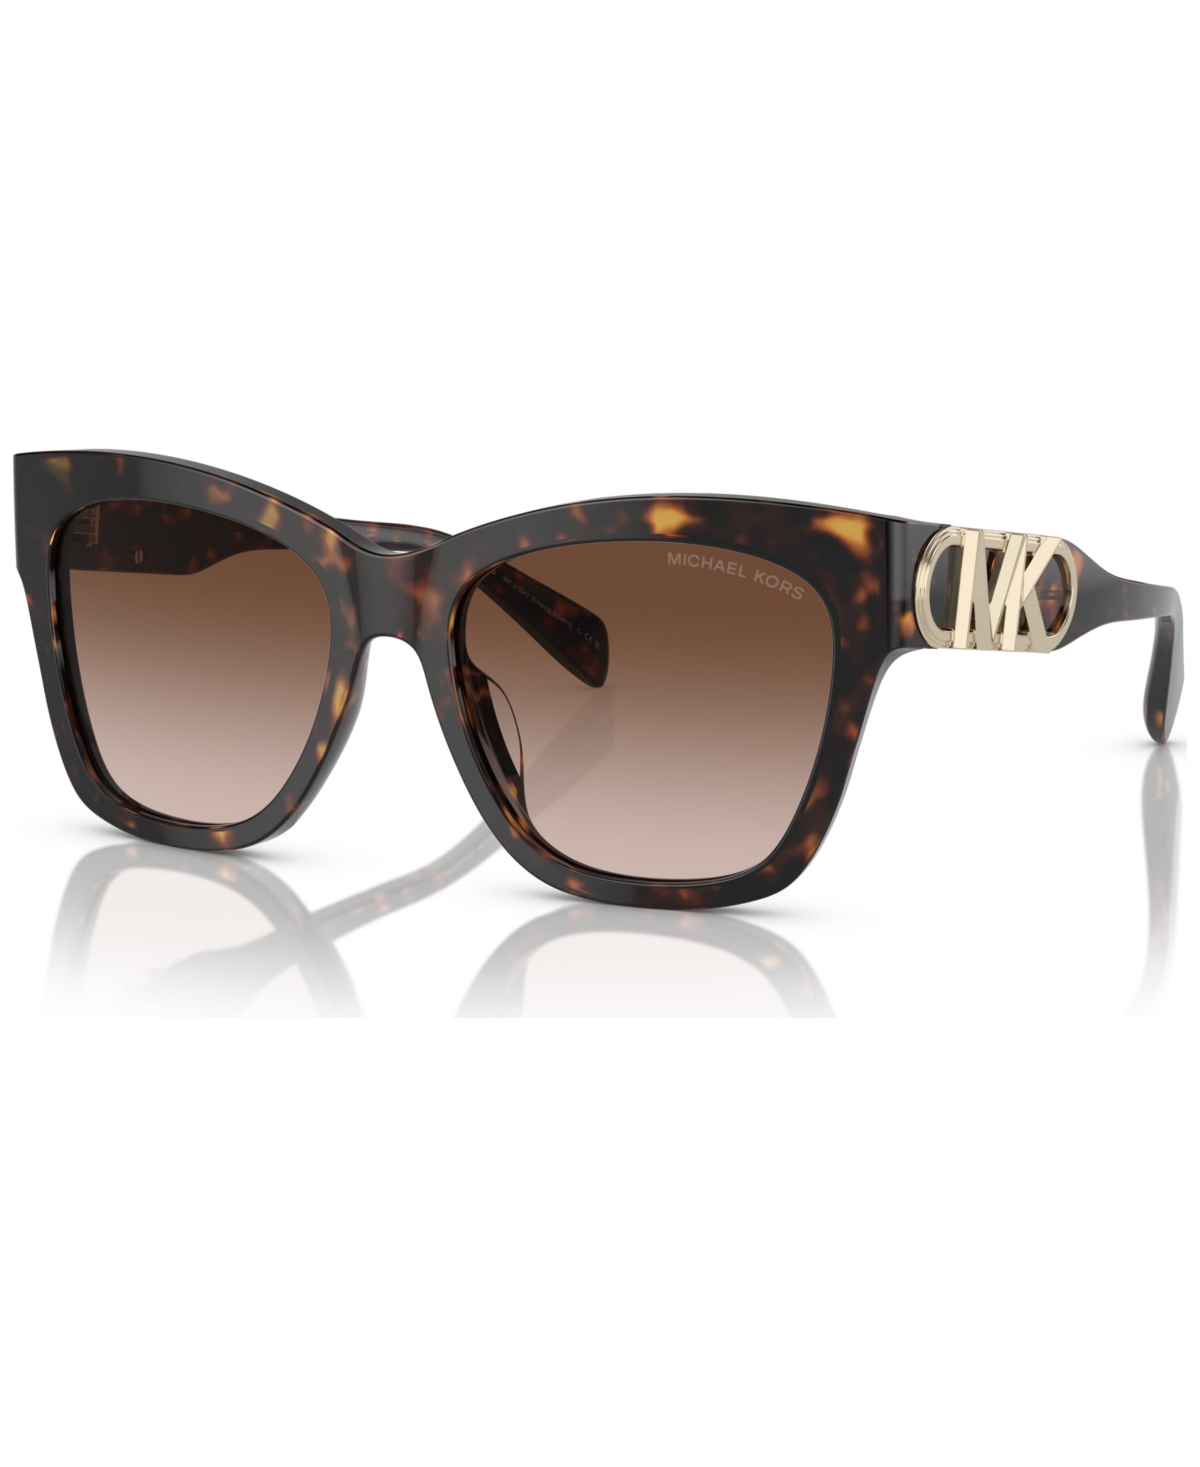 Michael Kors Women's Sunglasses, Empire Square In Brown